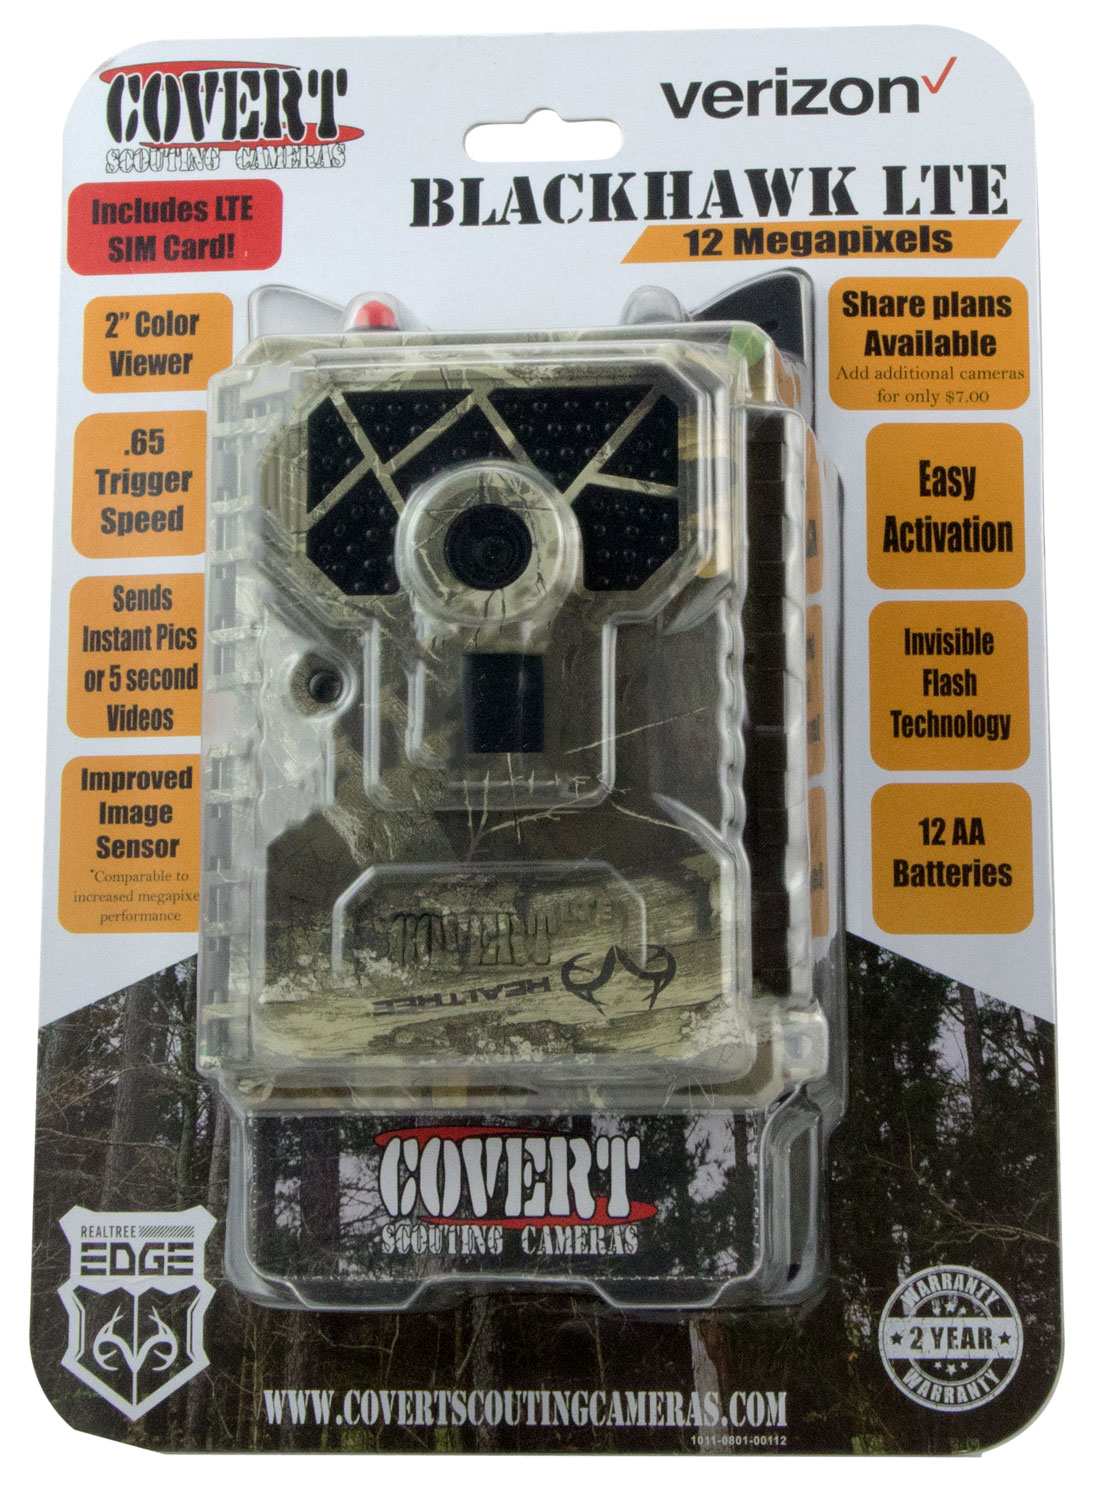 Covert Scouting Cameras 5465 Blackhawk Verizon LTE Realtree Edge 2